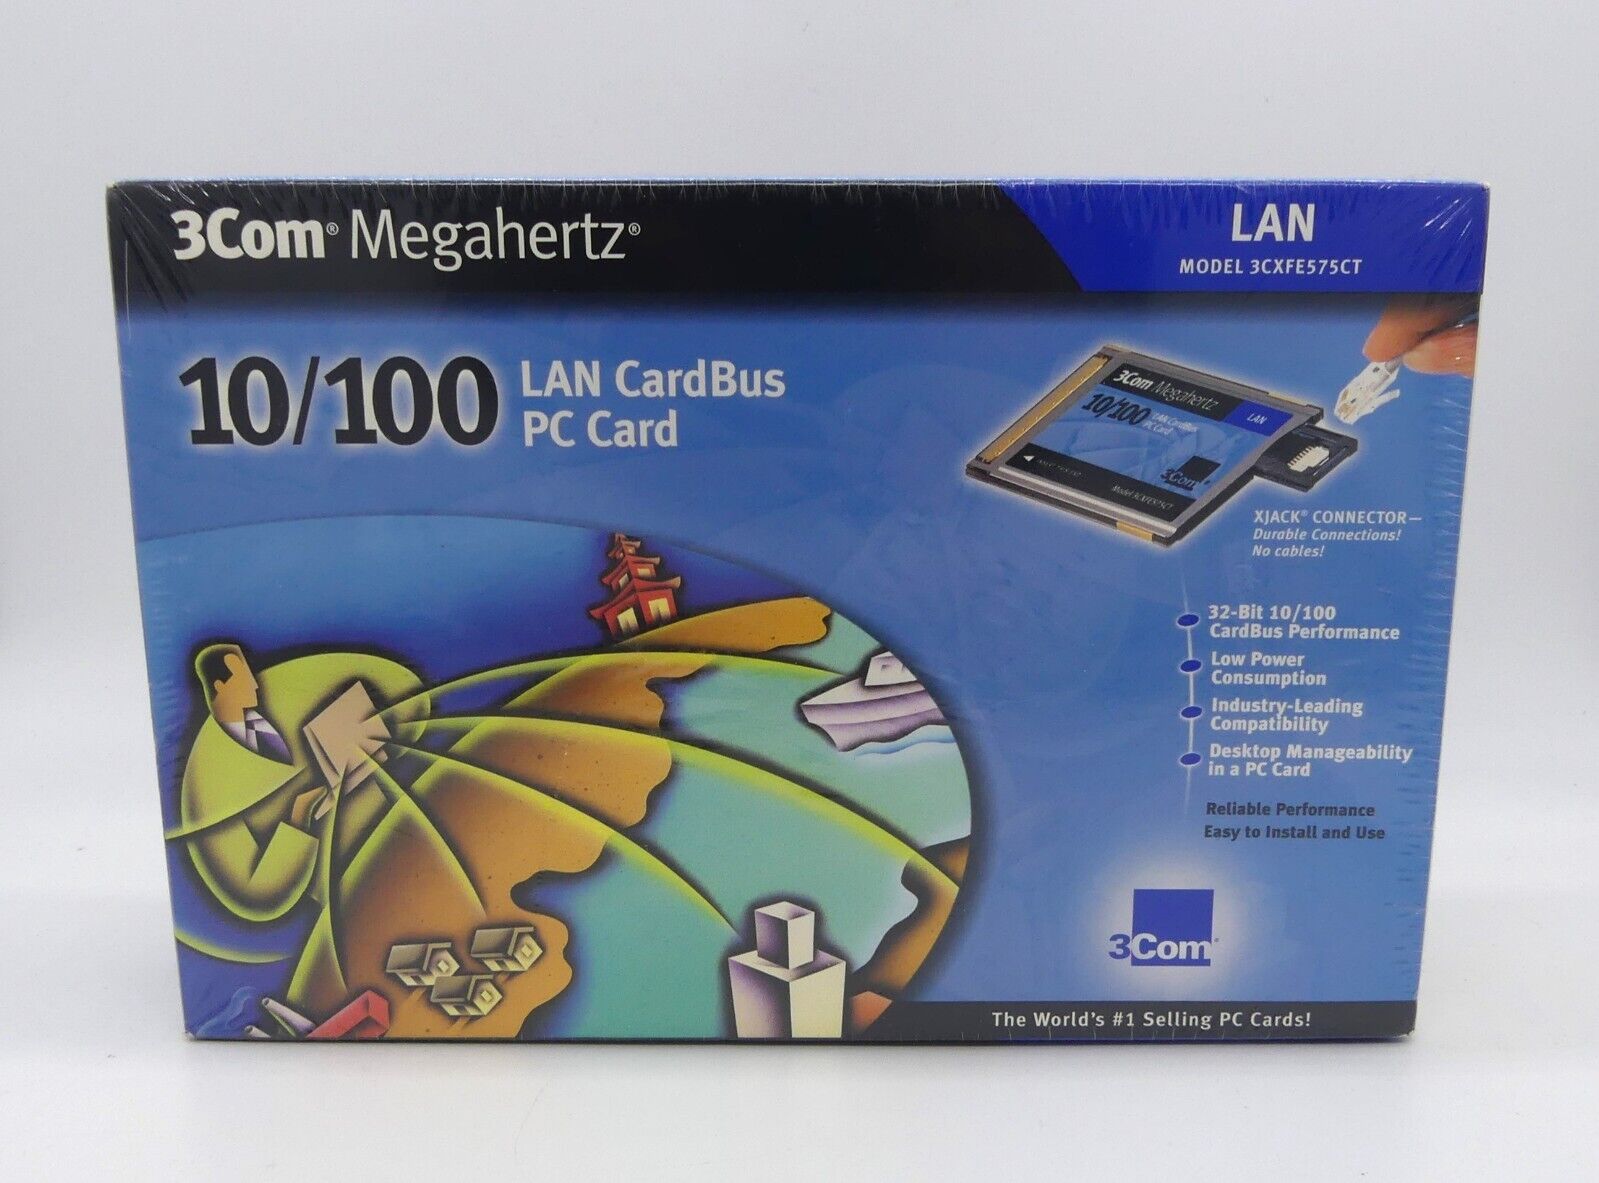 3Com Megahertz 10/100 LAN CardBus PC Card LAN Model# 3CXFE575CT